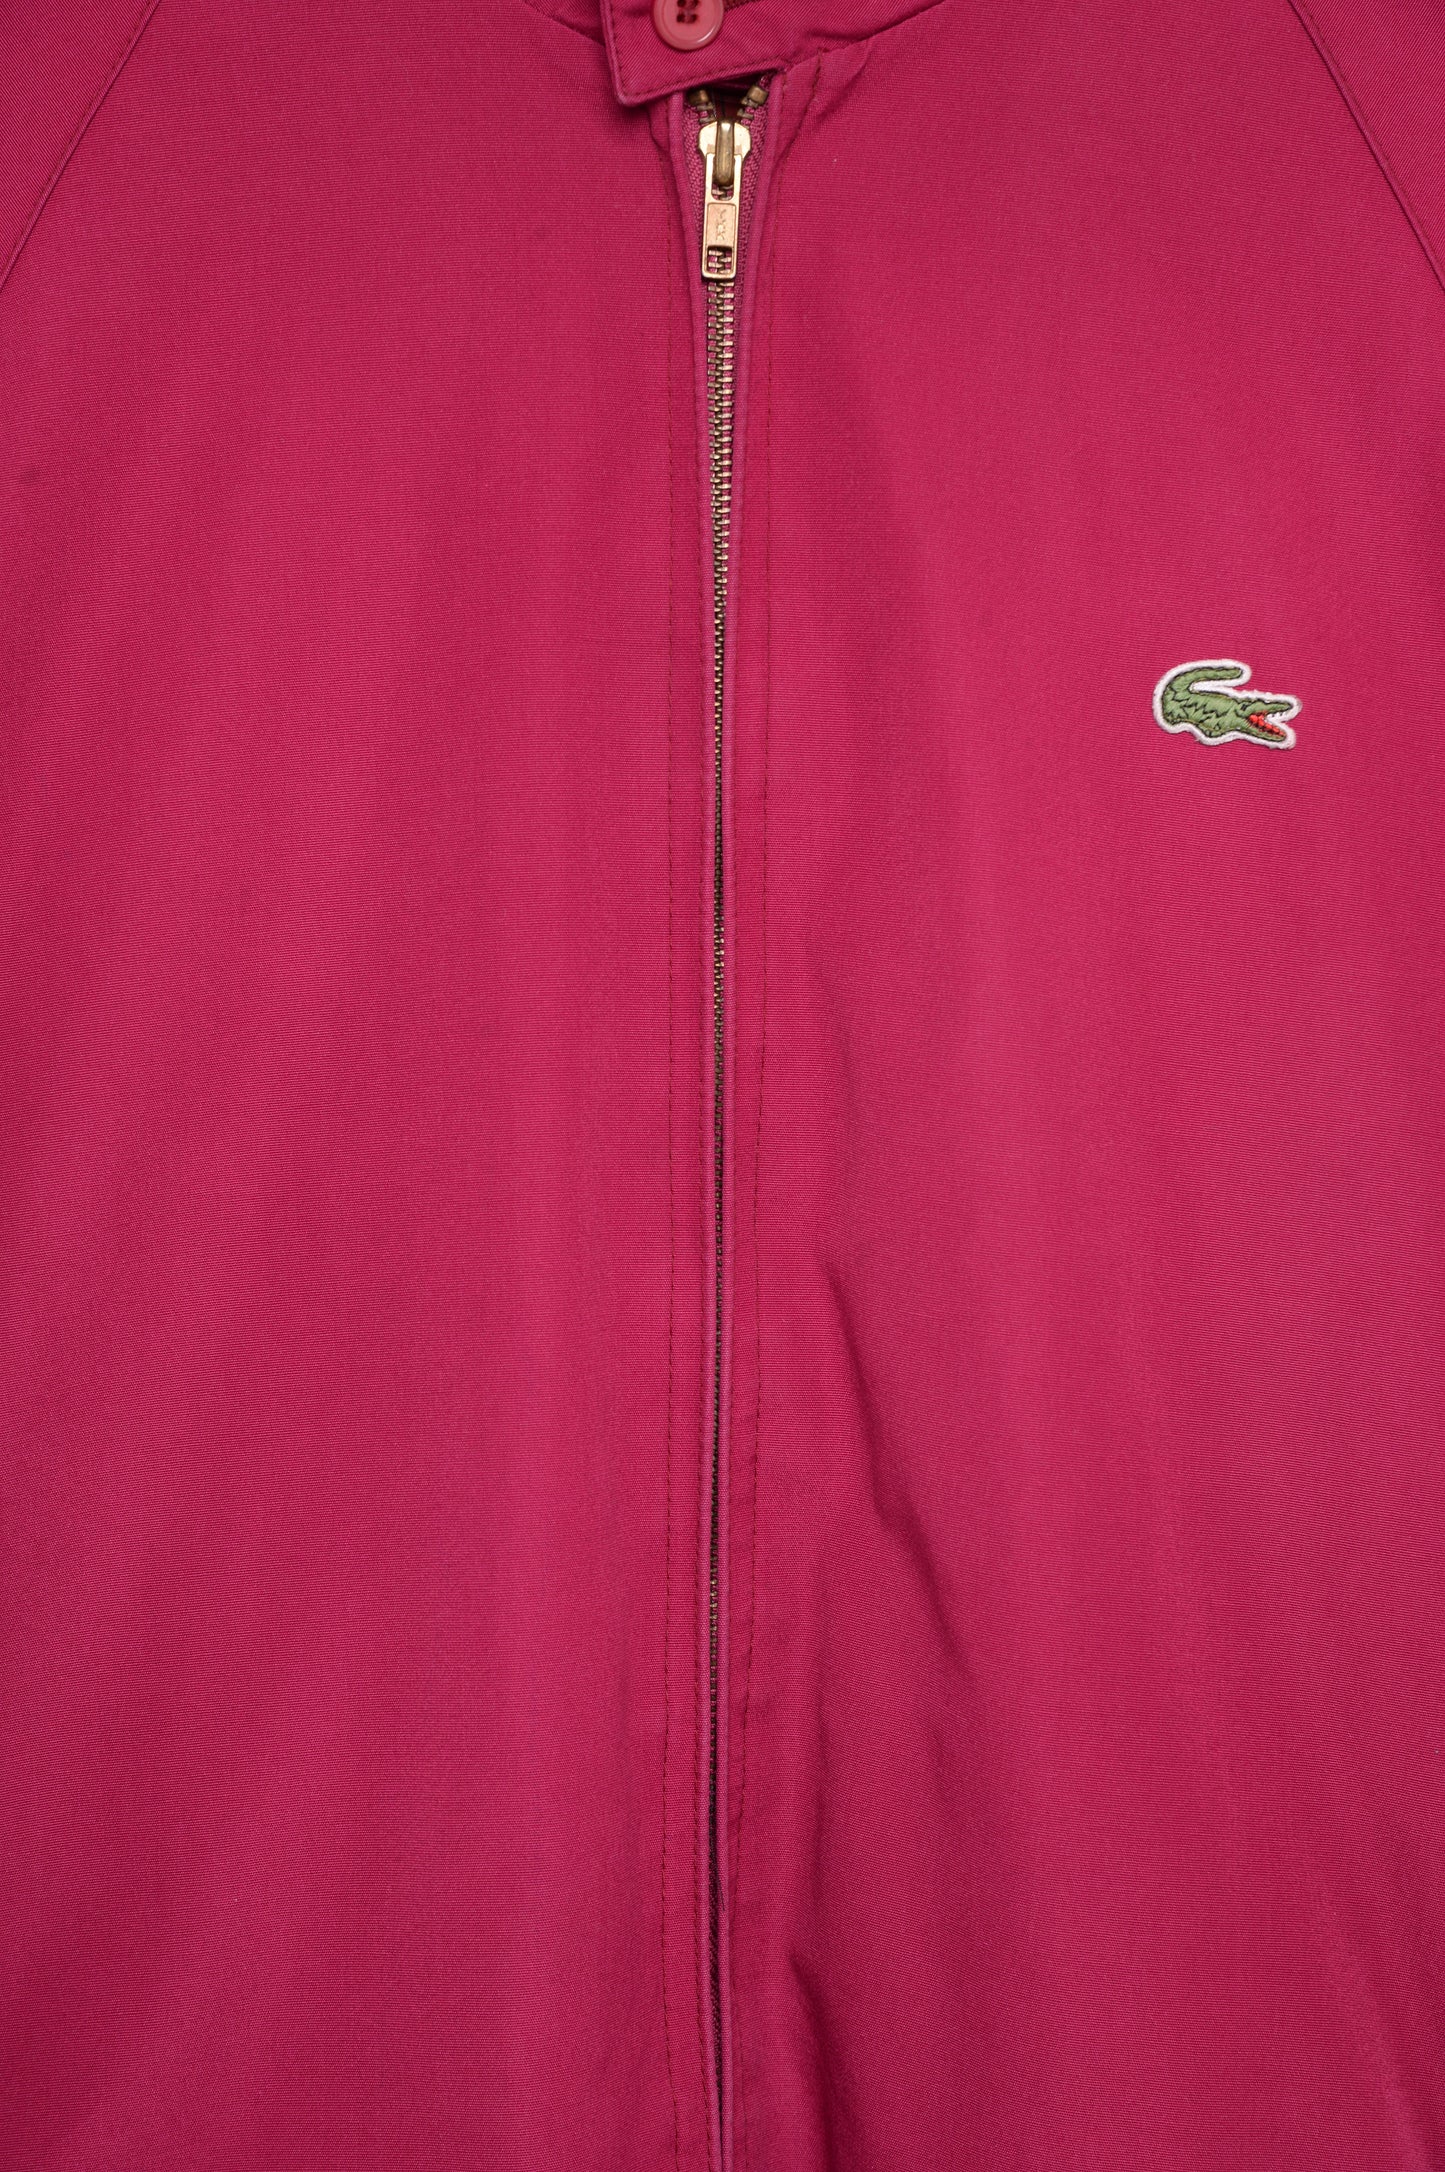 Pink Lacoste Golf Jacket